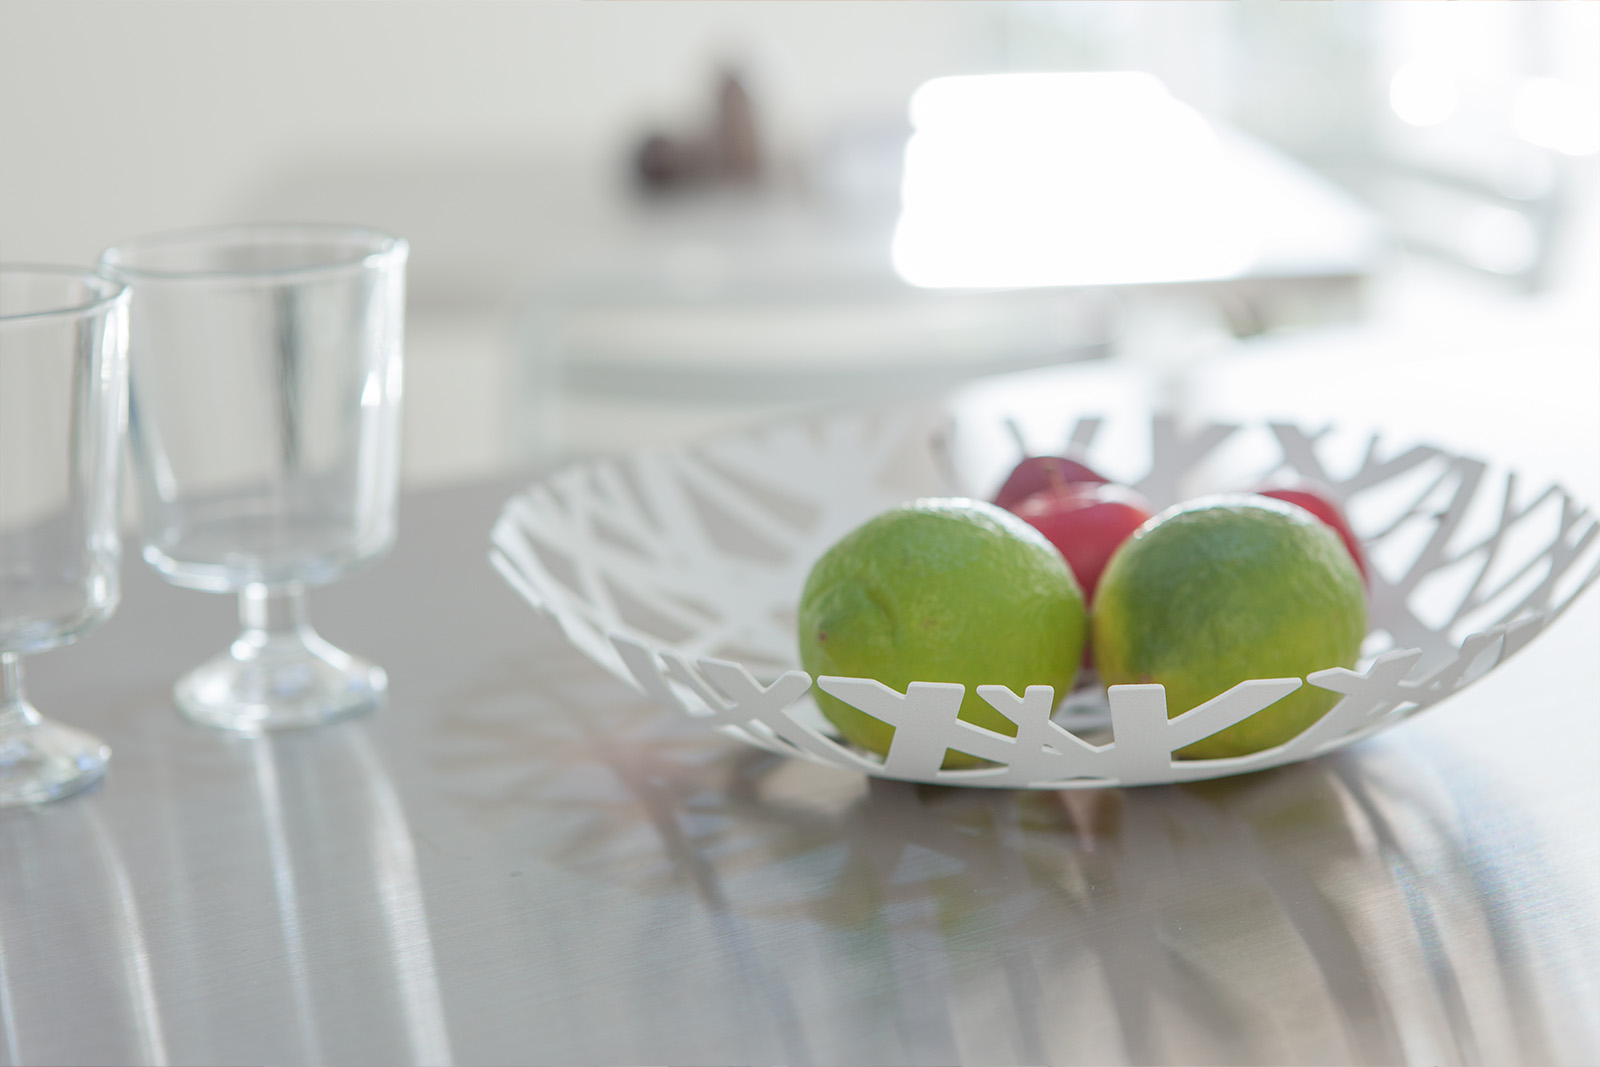 Yamazaki Home Fruit Bowl holding limes on the kitchen countertop. 